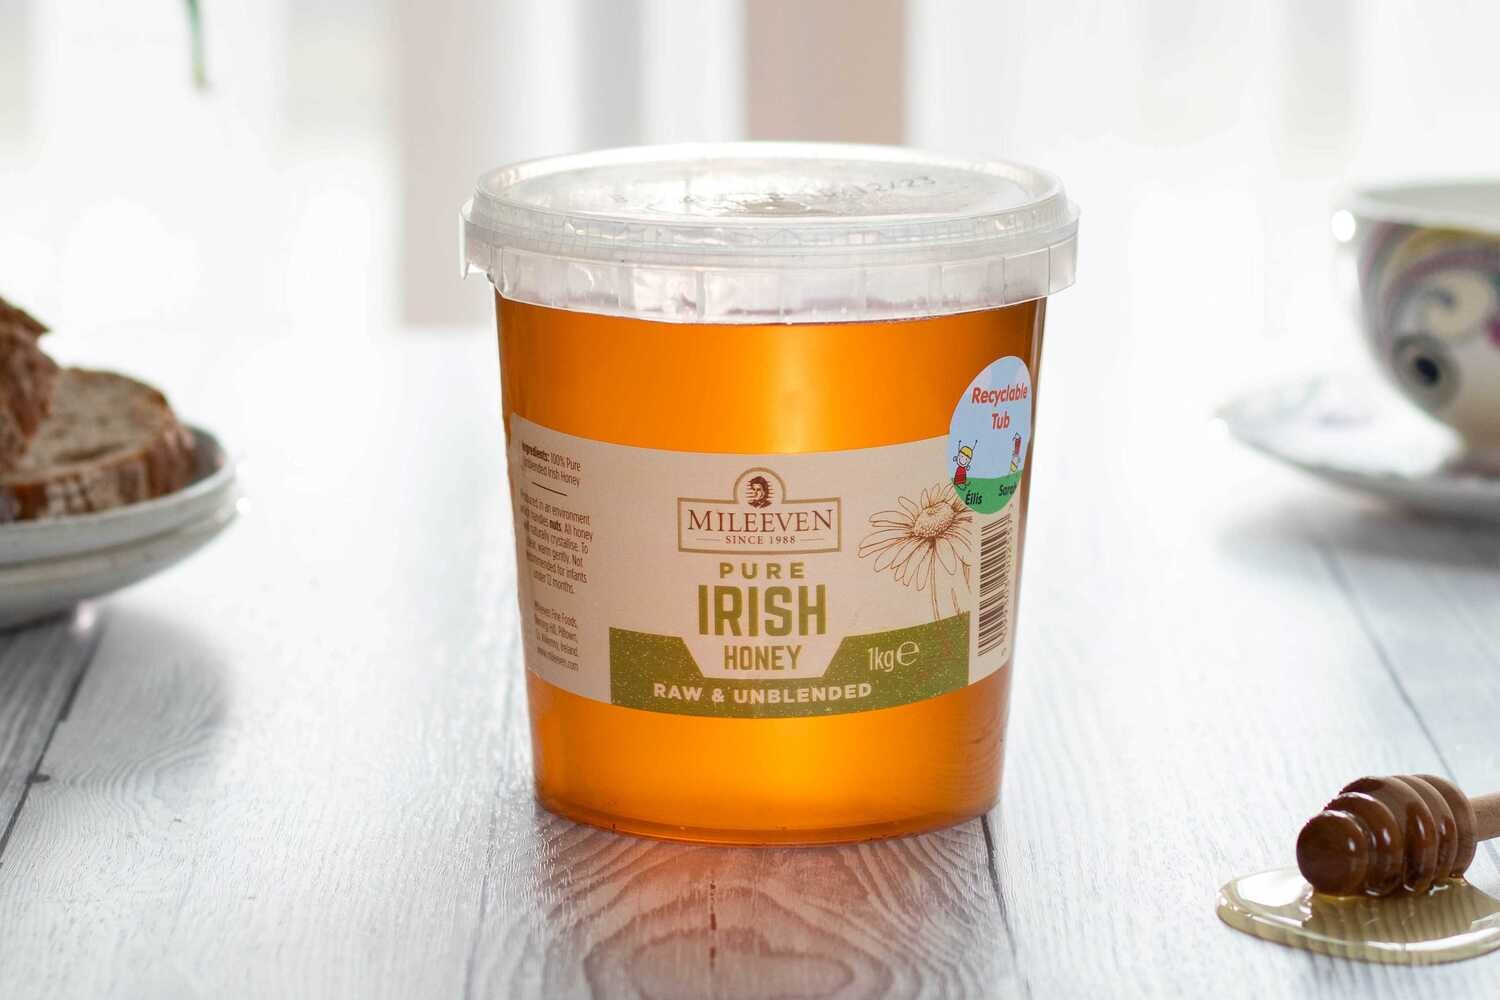 Mileeven 1kg Pure Irish Honey, Raw & Unblended